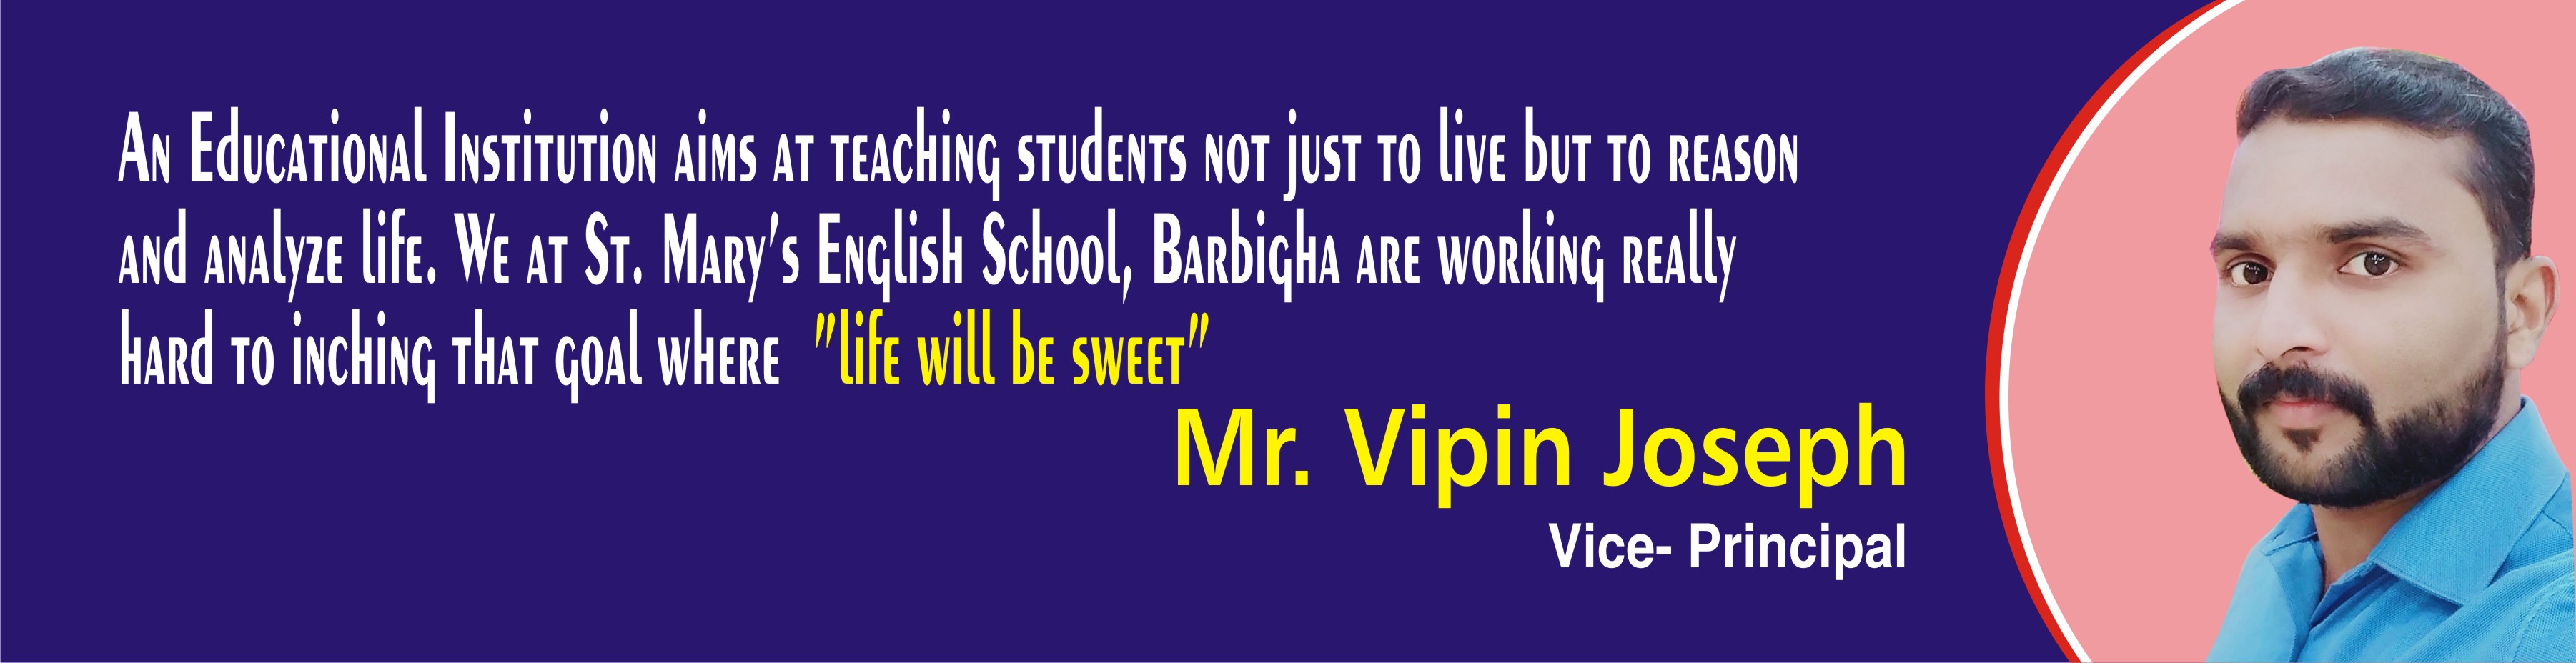 "Mr. Vipin Joseph [Vice Principal]"